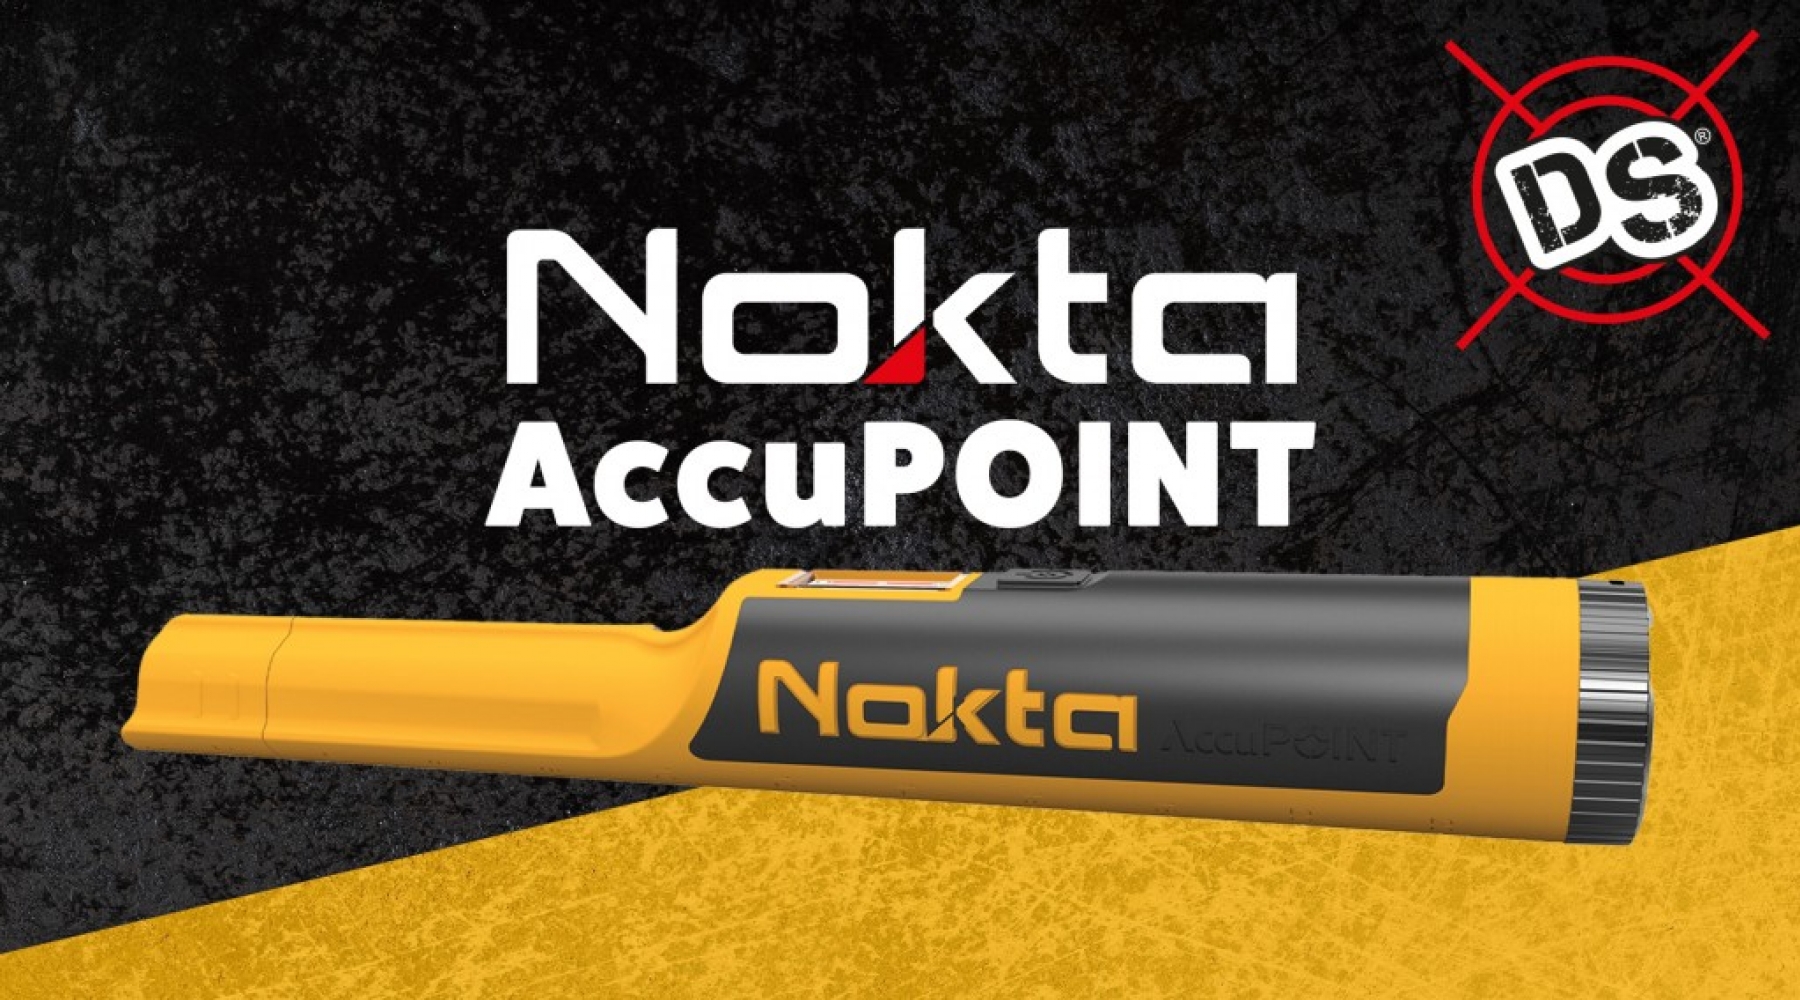 Nokta launches the incredible Nokta AccuPOINT on the market